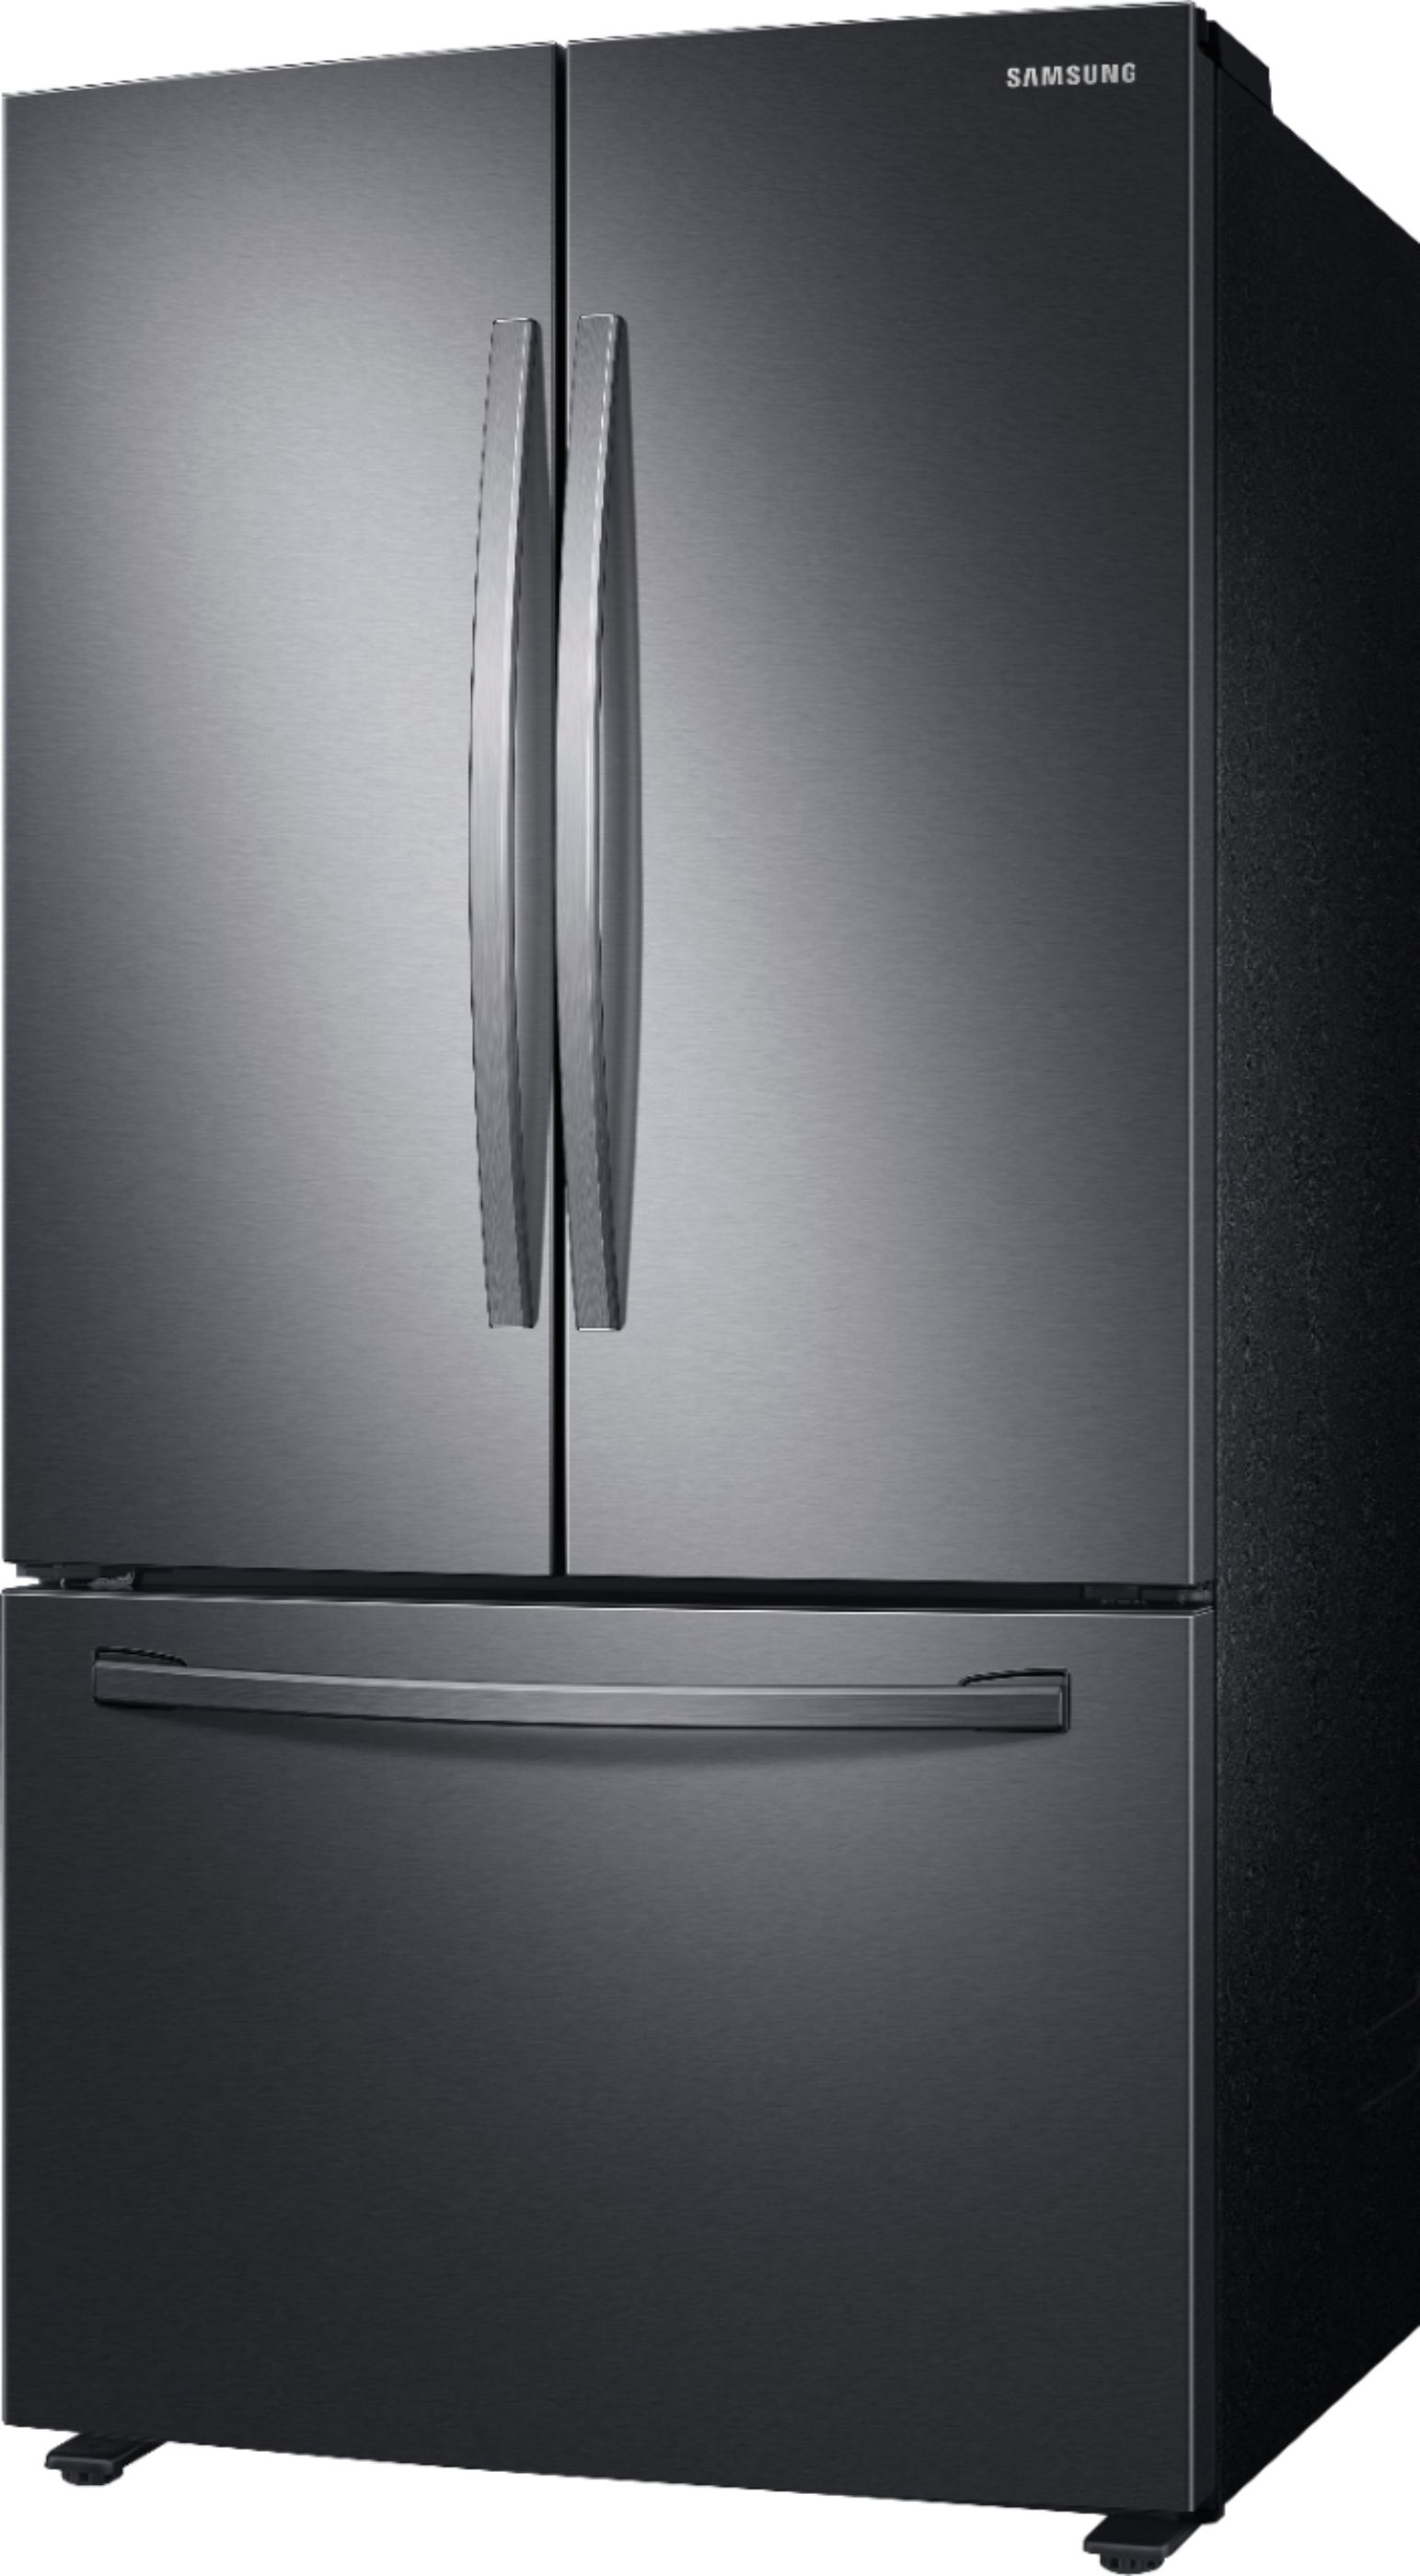 Left View: Samsung - 25 cu. ft. Large Capacity 4-Door French Door Refrigerator with External Water & Ice Dispenser - Stainless steel